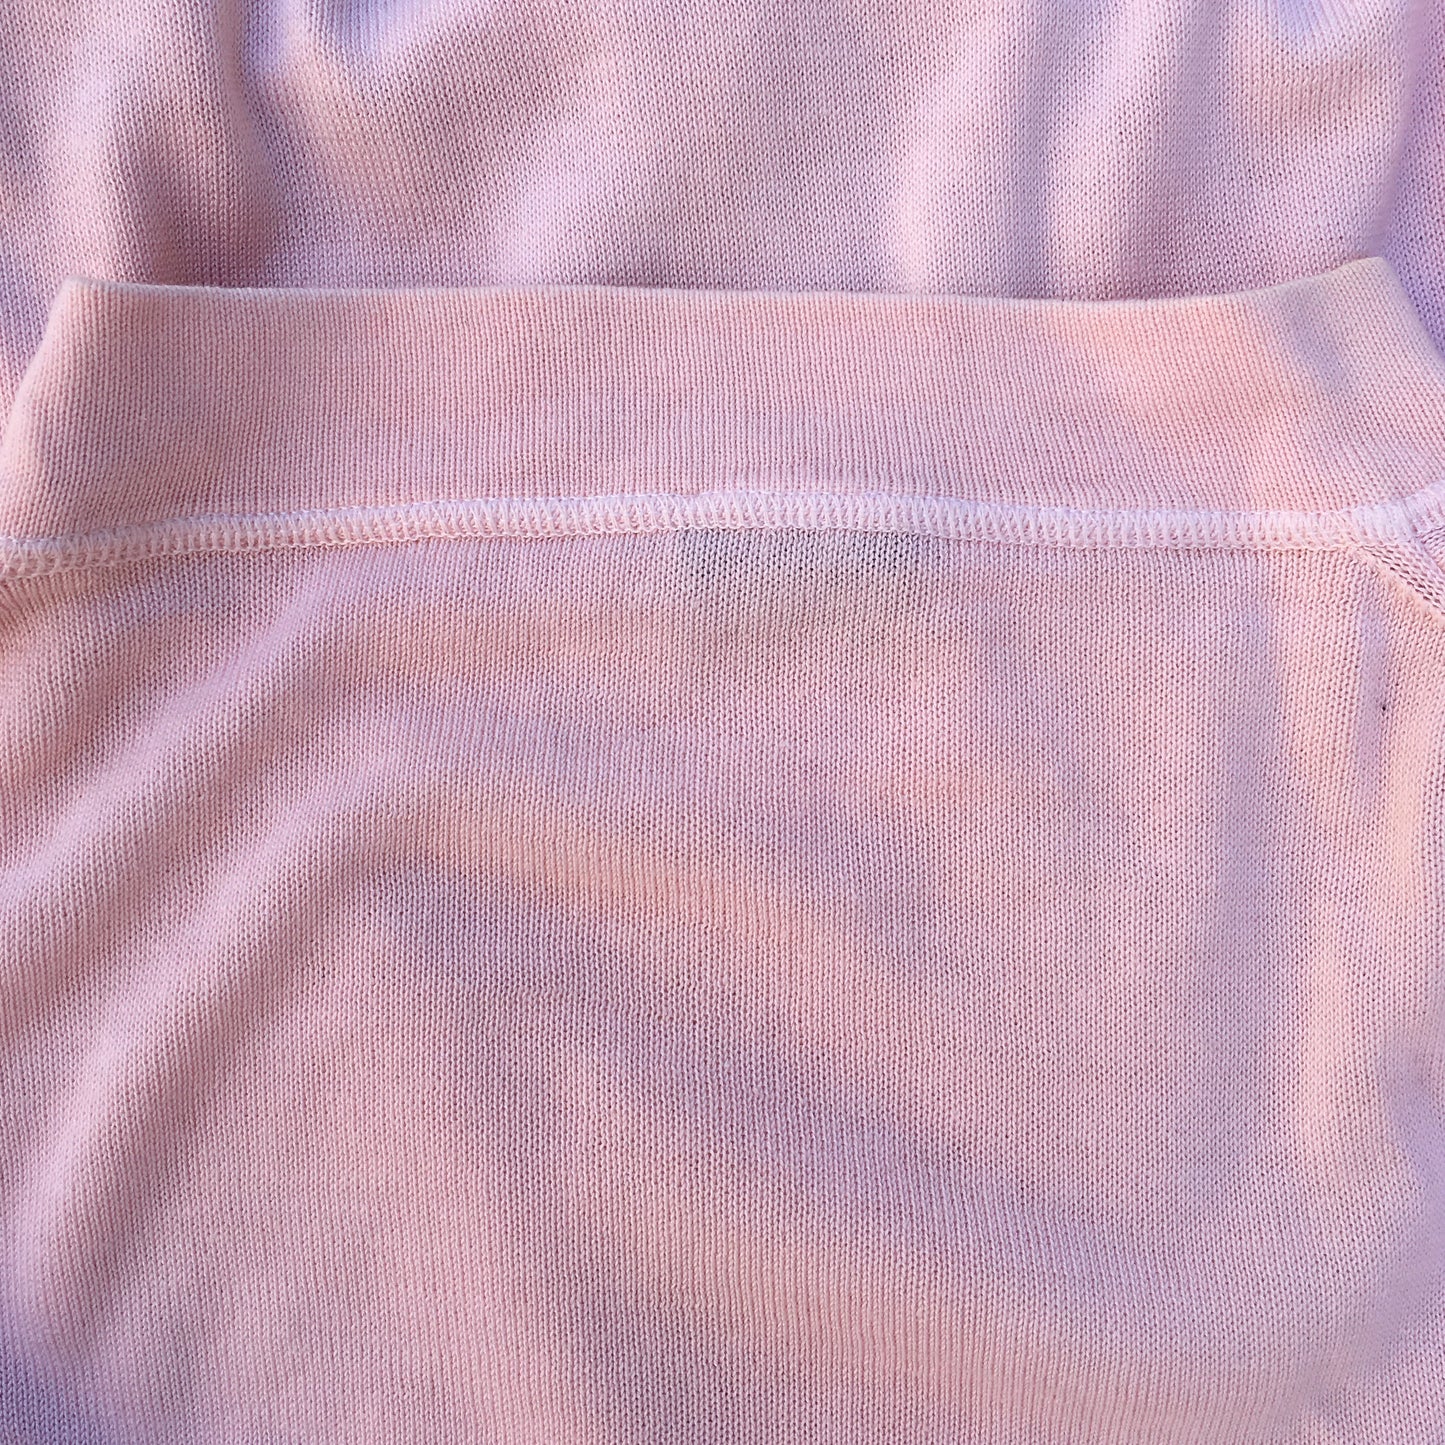 C.P. Company SS 90s Cotton Sweater - L/XL